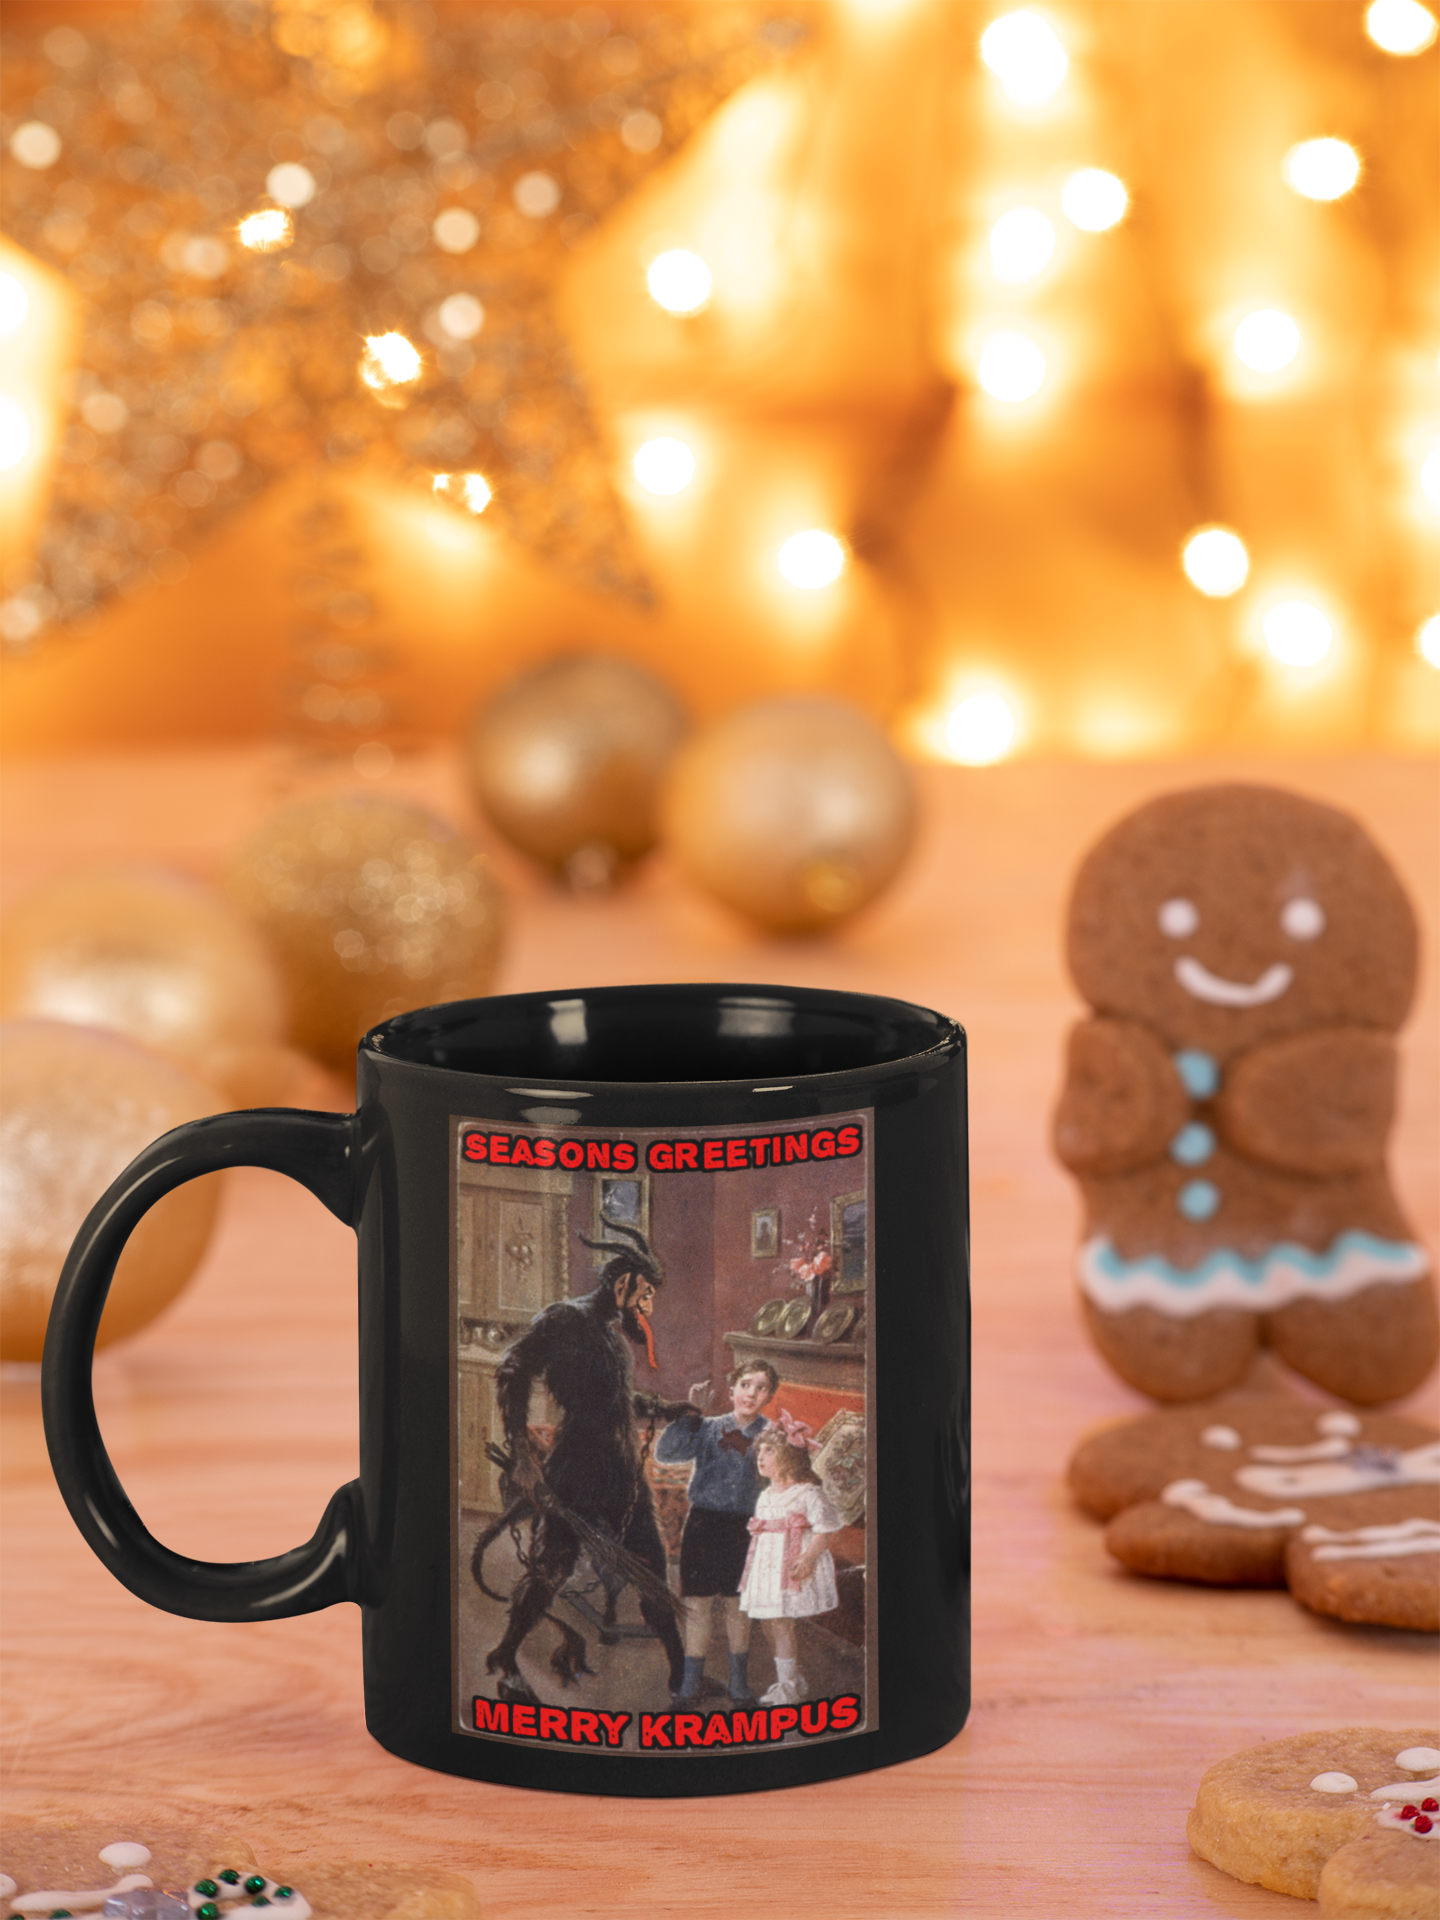 Merry Krampus Christmas Devil Season Greetings Winter Coffee Mug